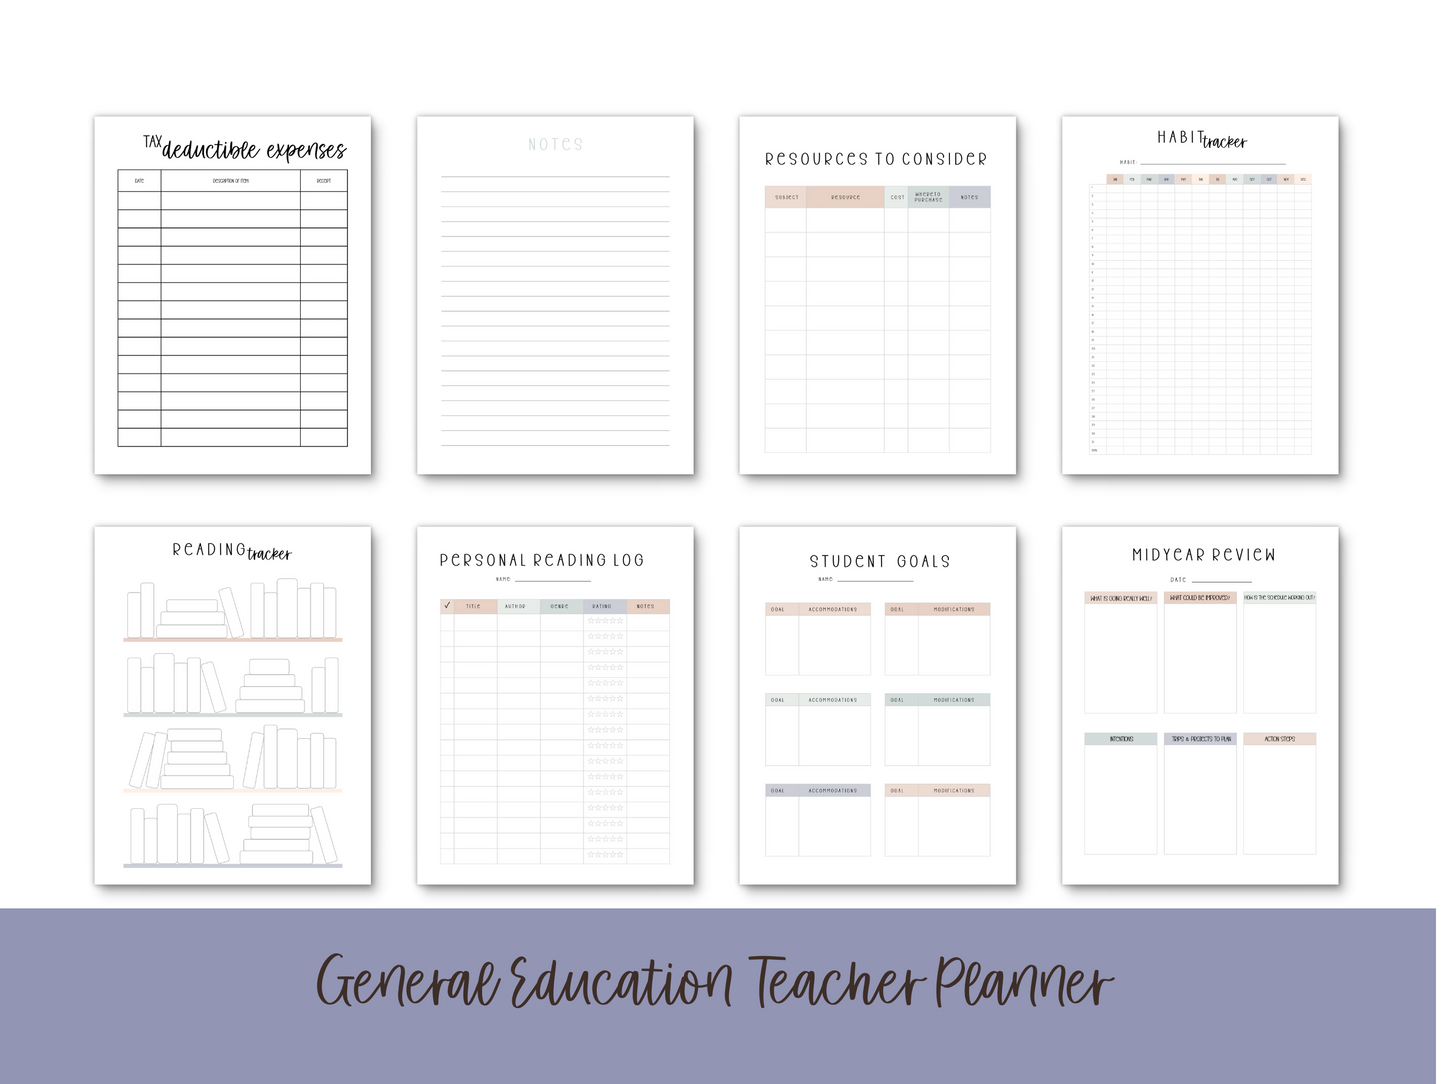 Gen Ed Teacher Printable Planner - Neutral Theme